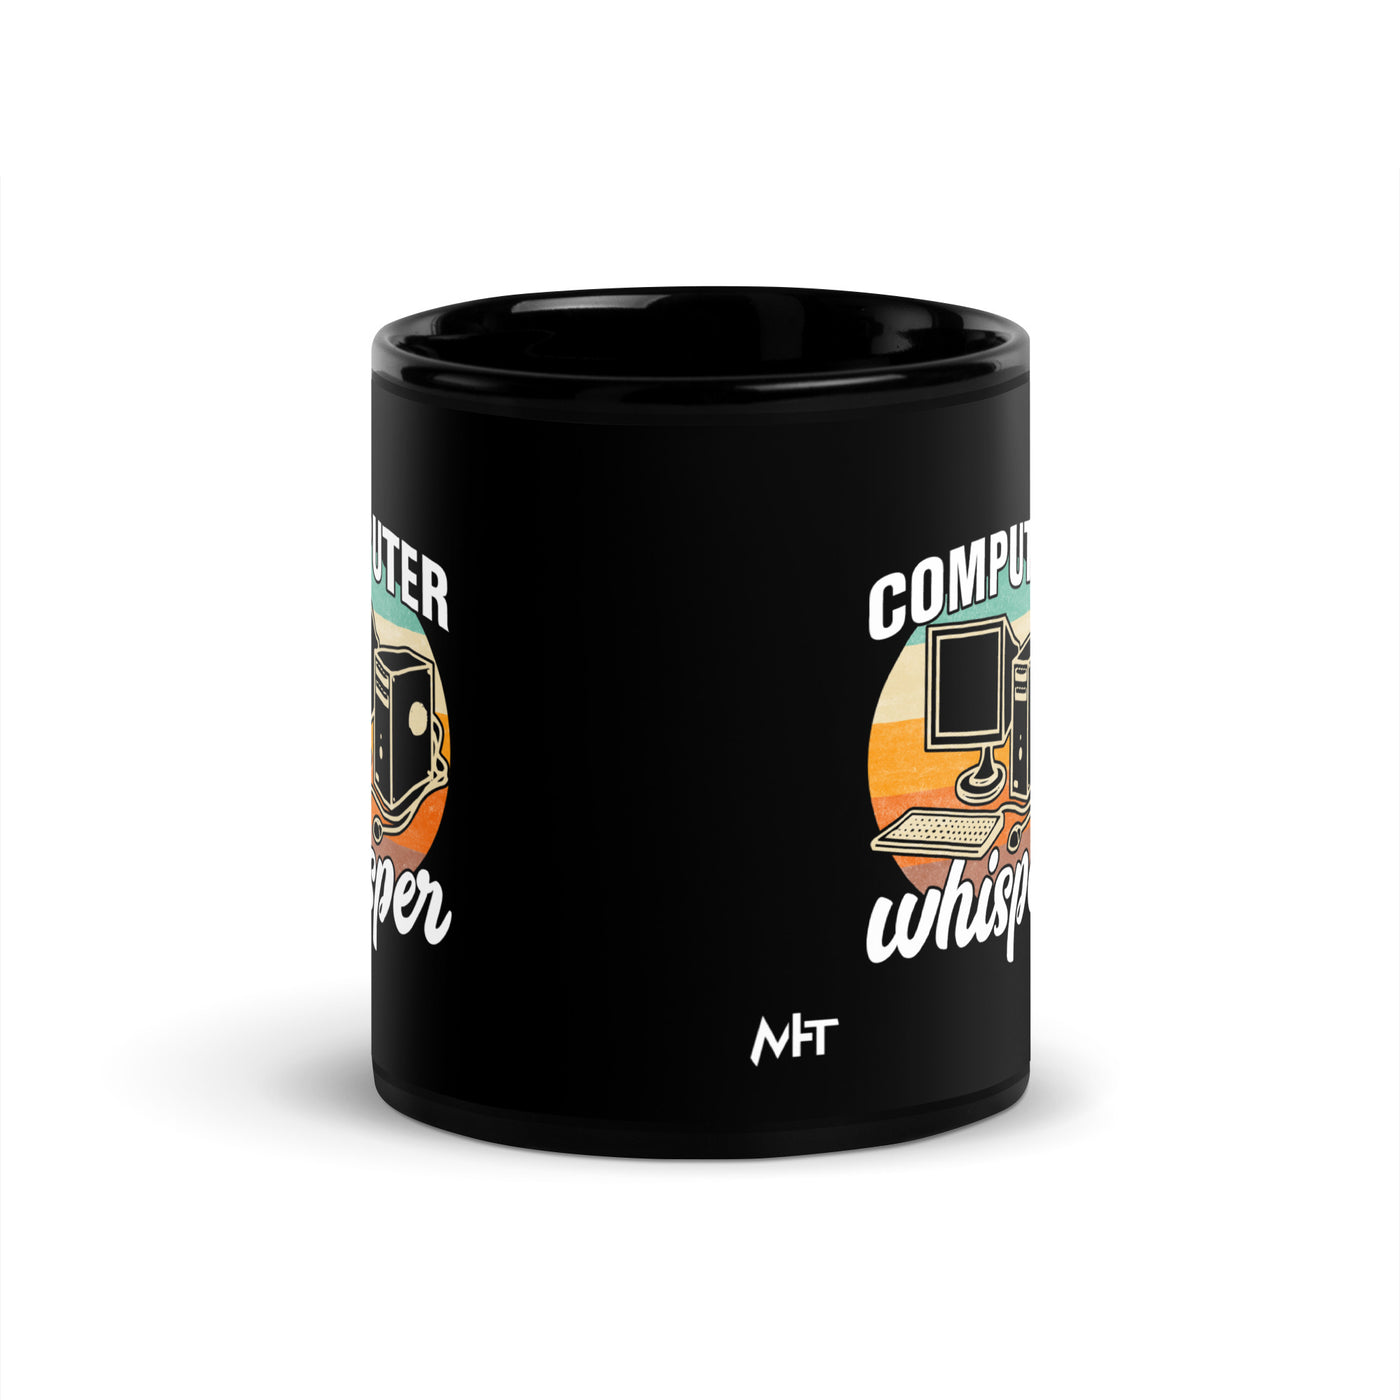 Computers whisper - Black Glossy Mug